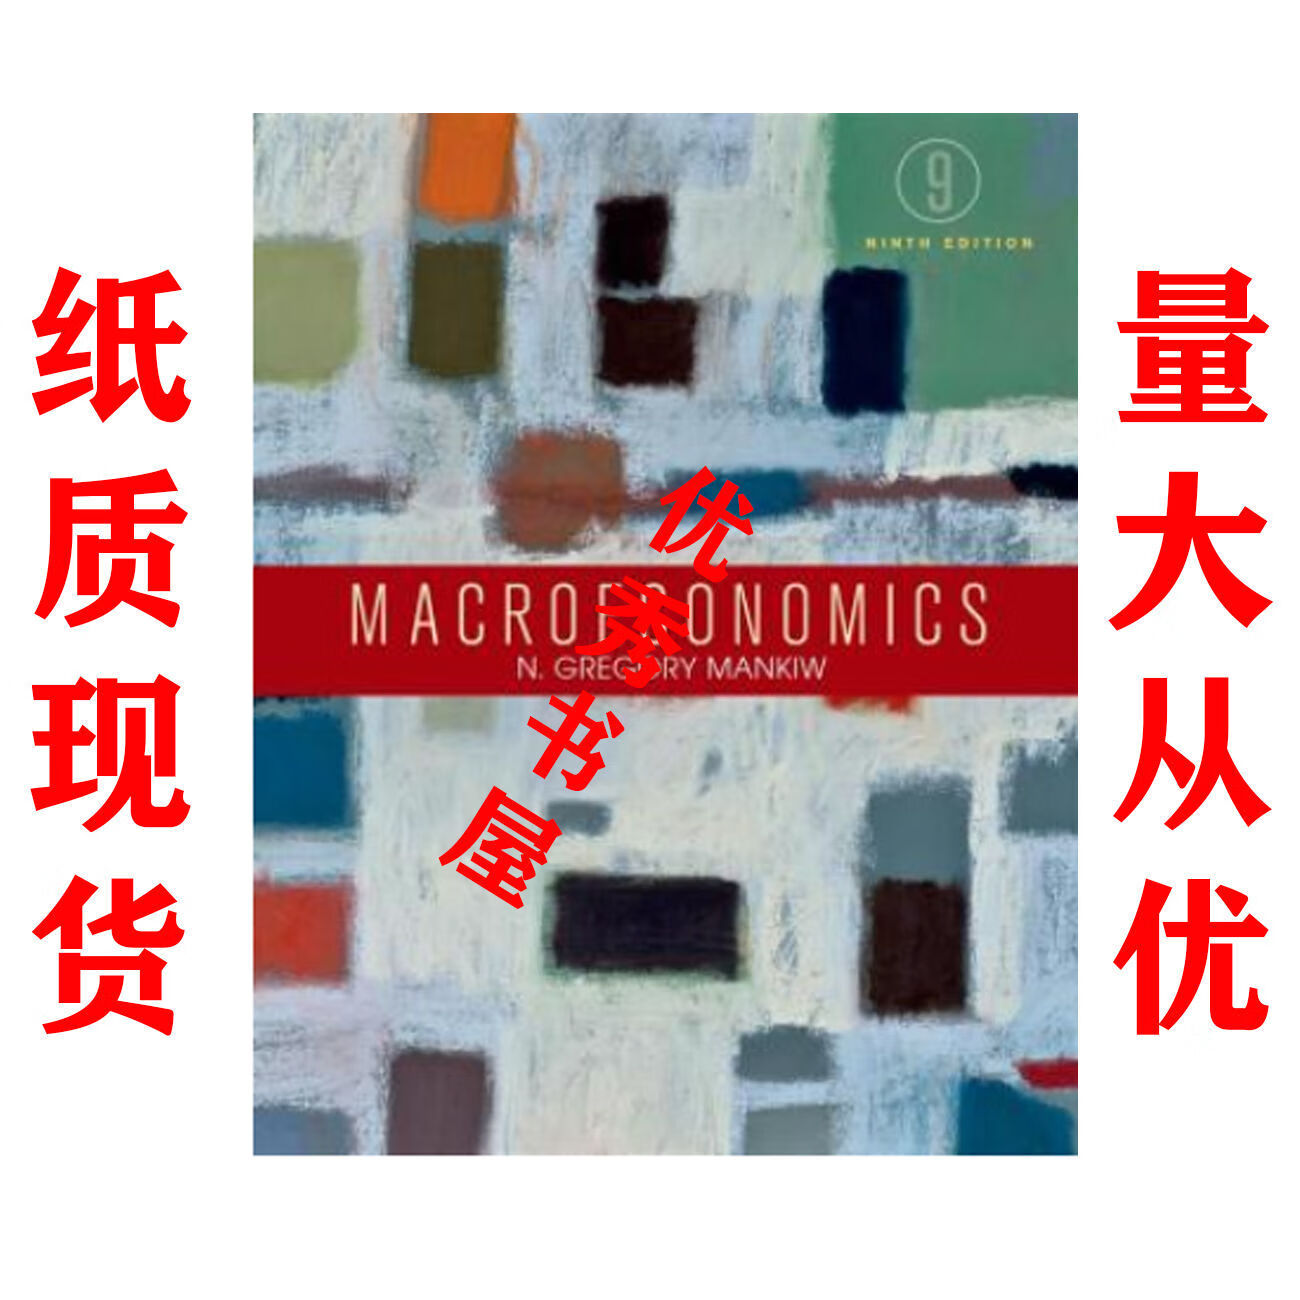 Macroeconomics(9th edition 2016)【N. GREGORY MANKIW】